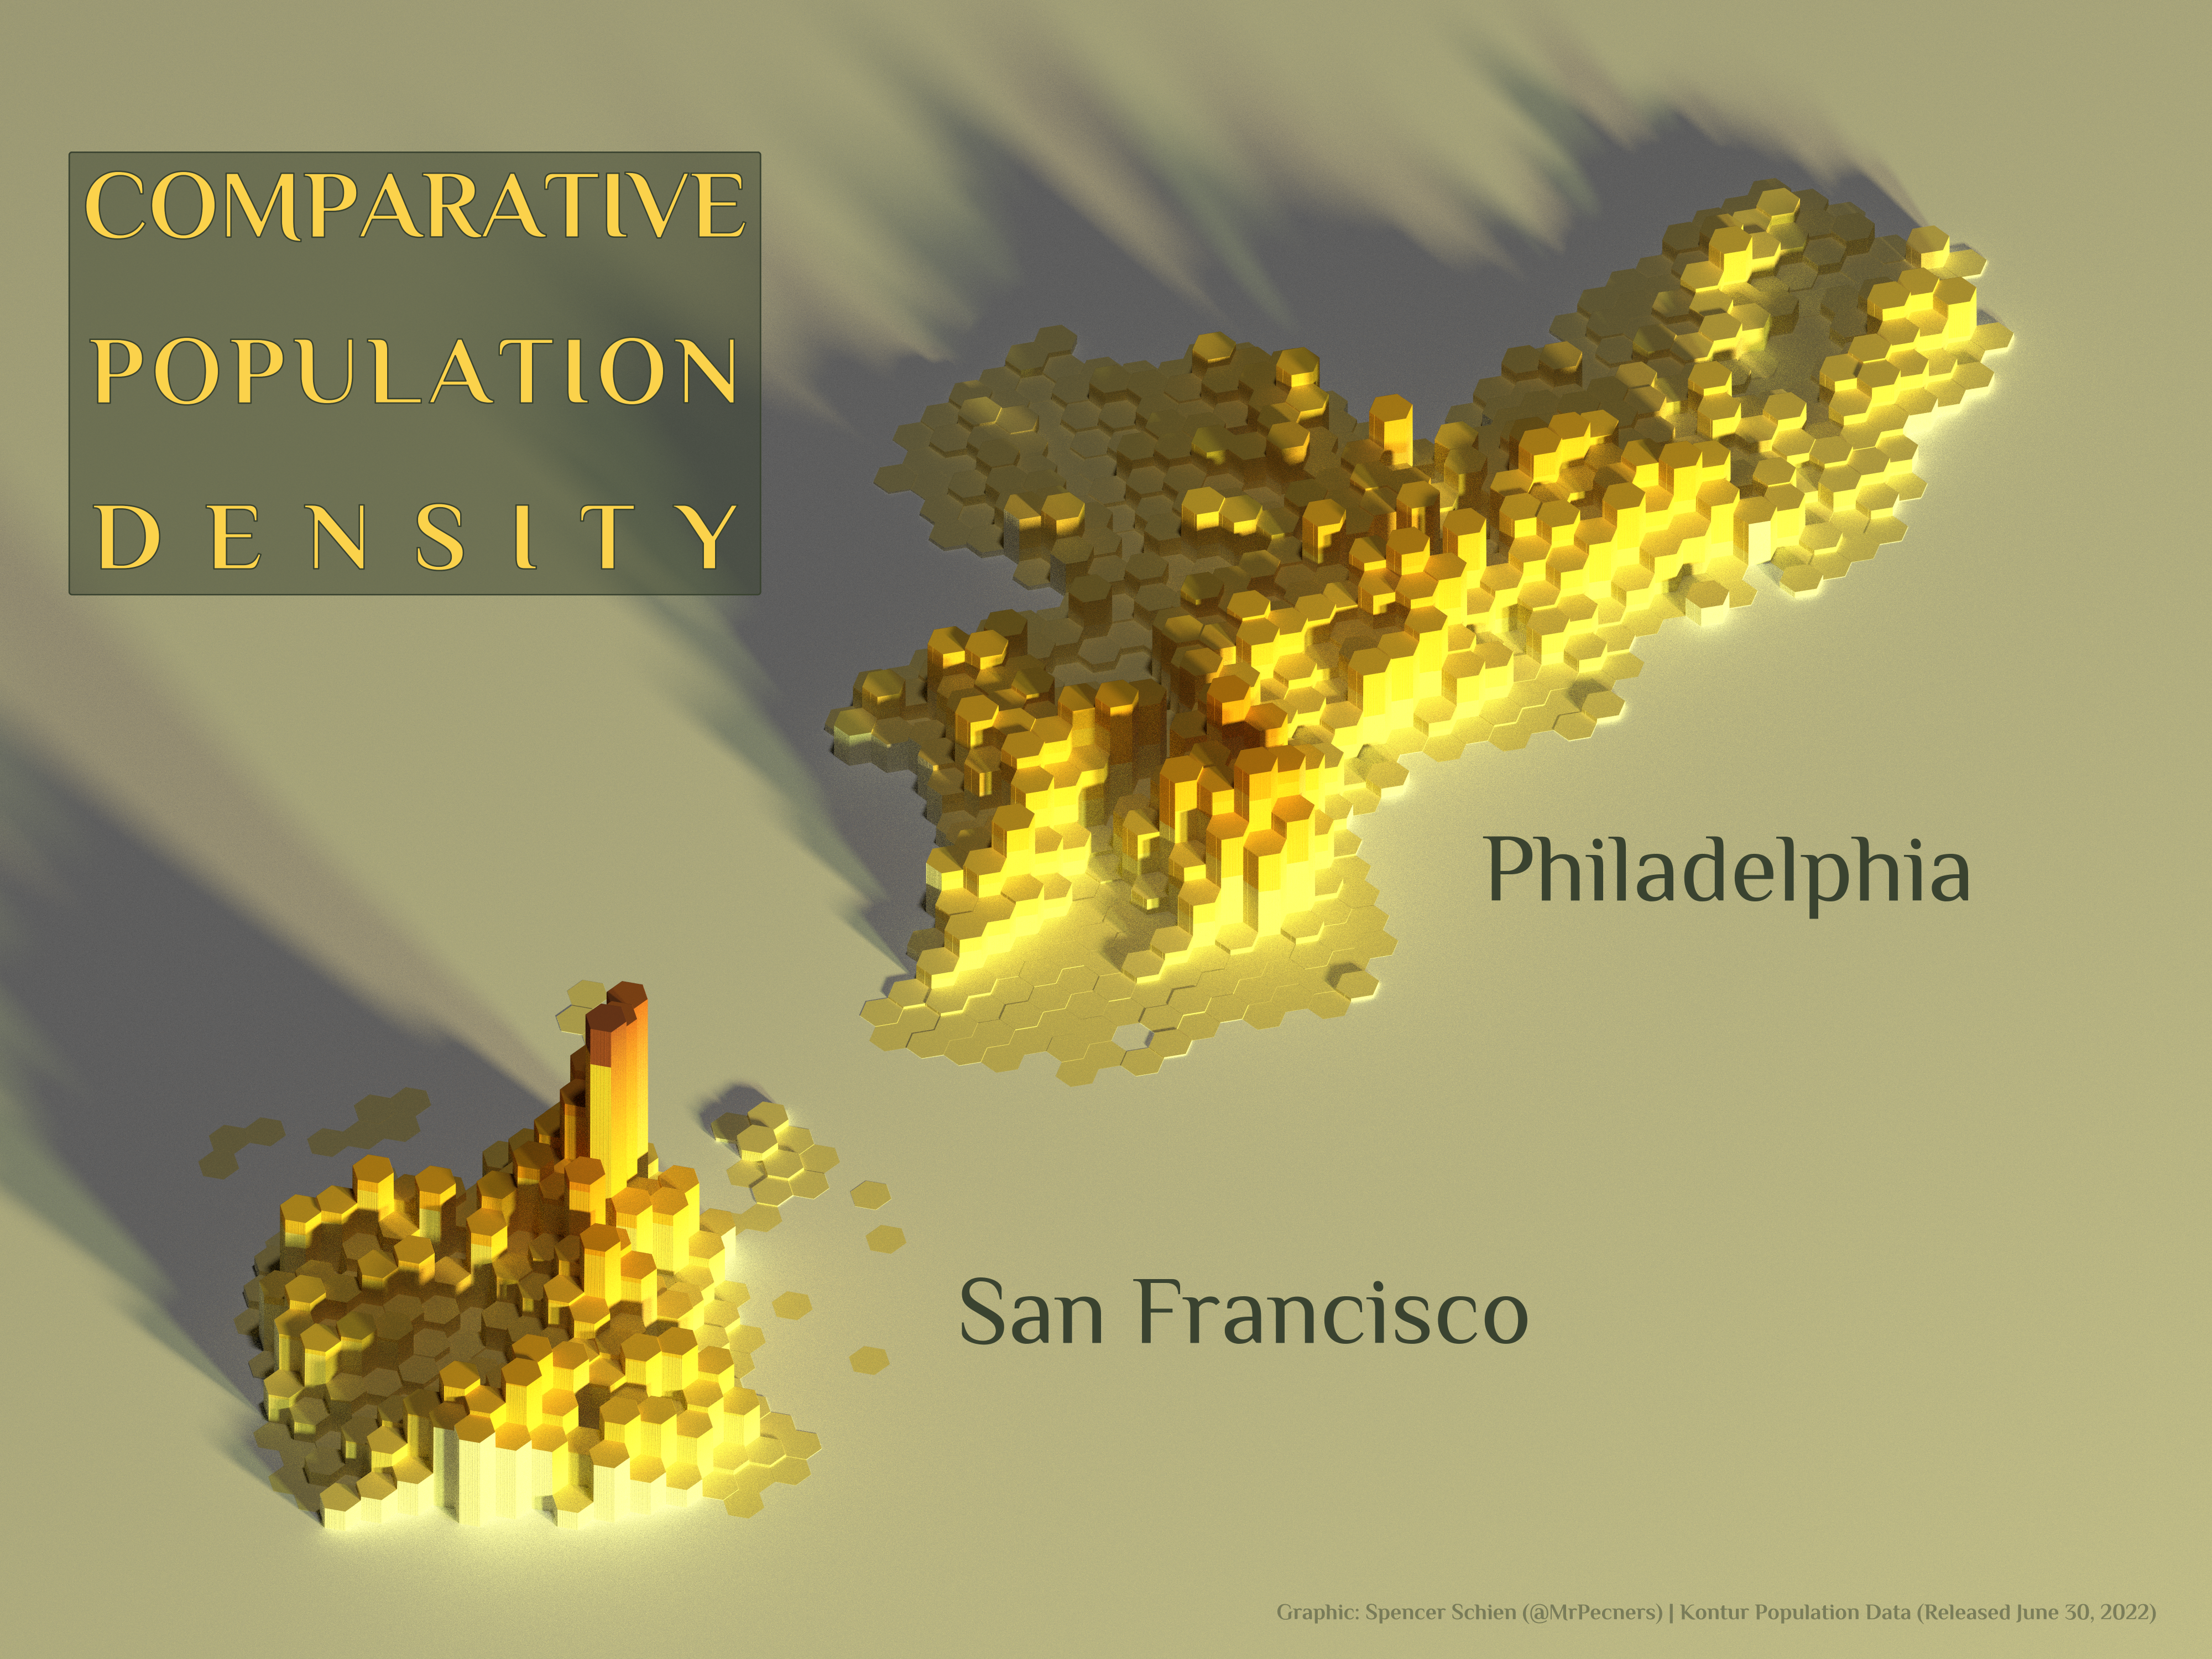 Comparative Population Density: Philadelphia and San Francisco